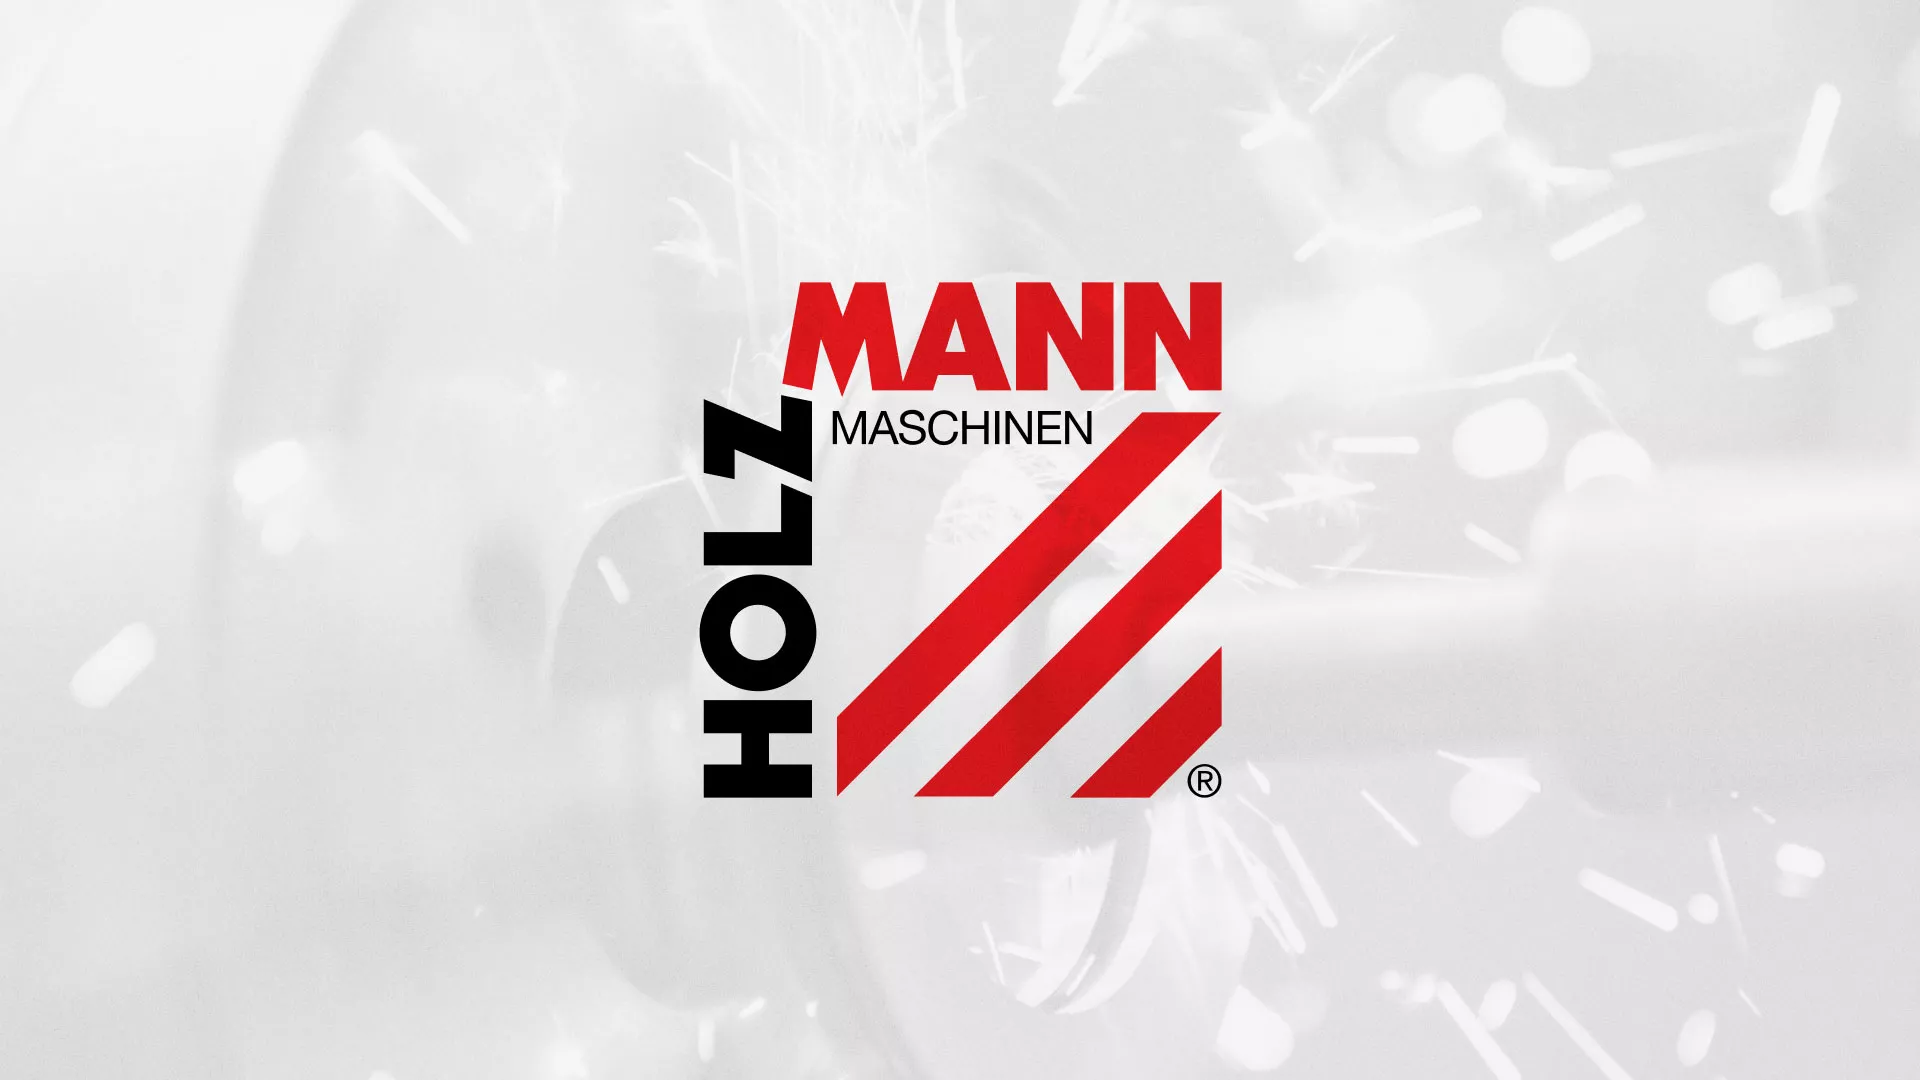 Создание сайта компании «HOLZMANN Maschinen GmbH» в Ярцево